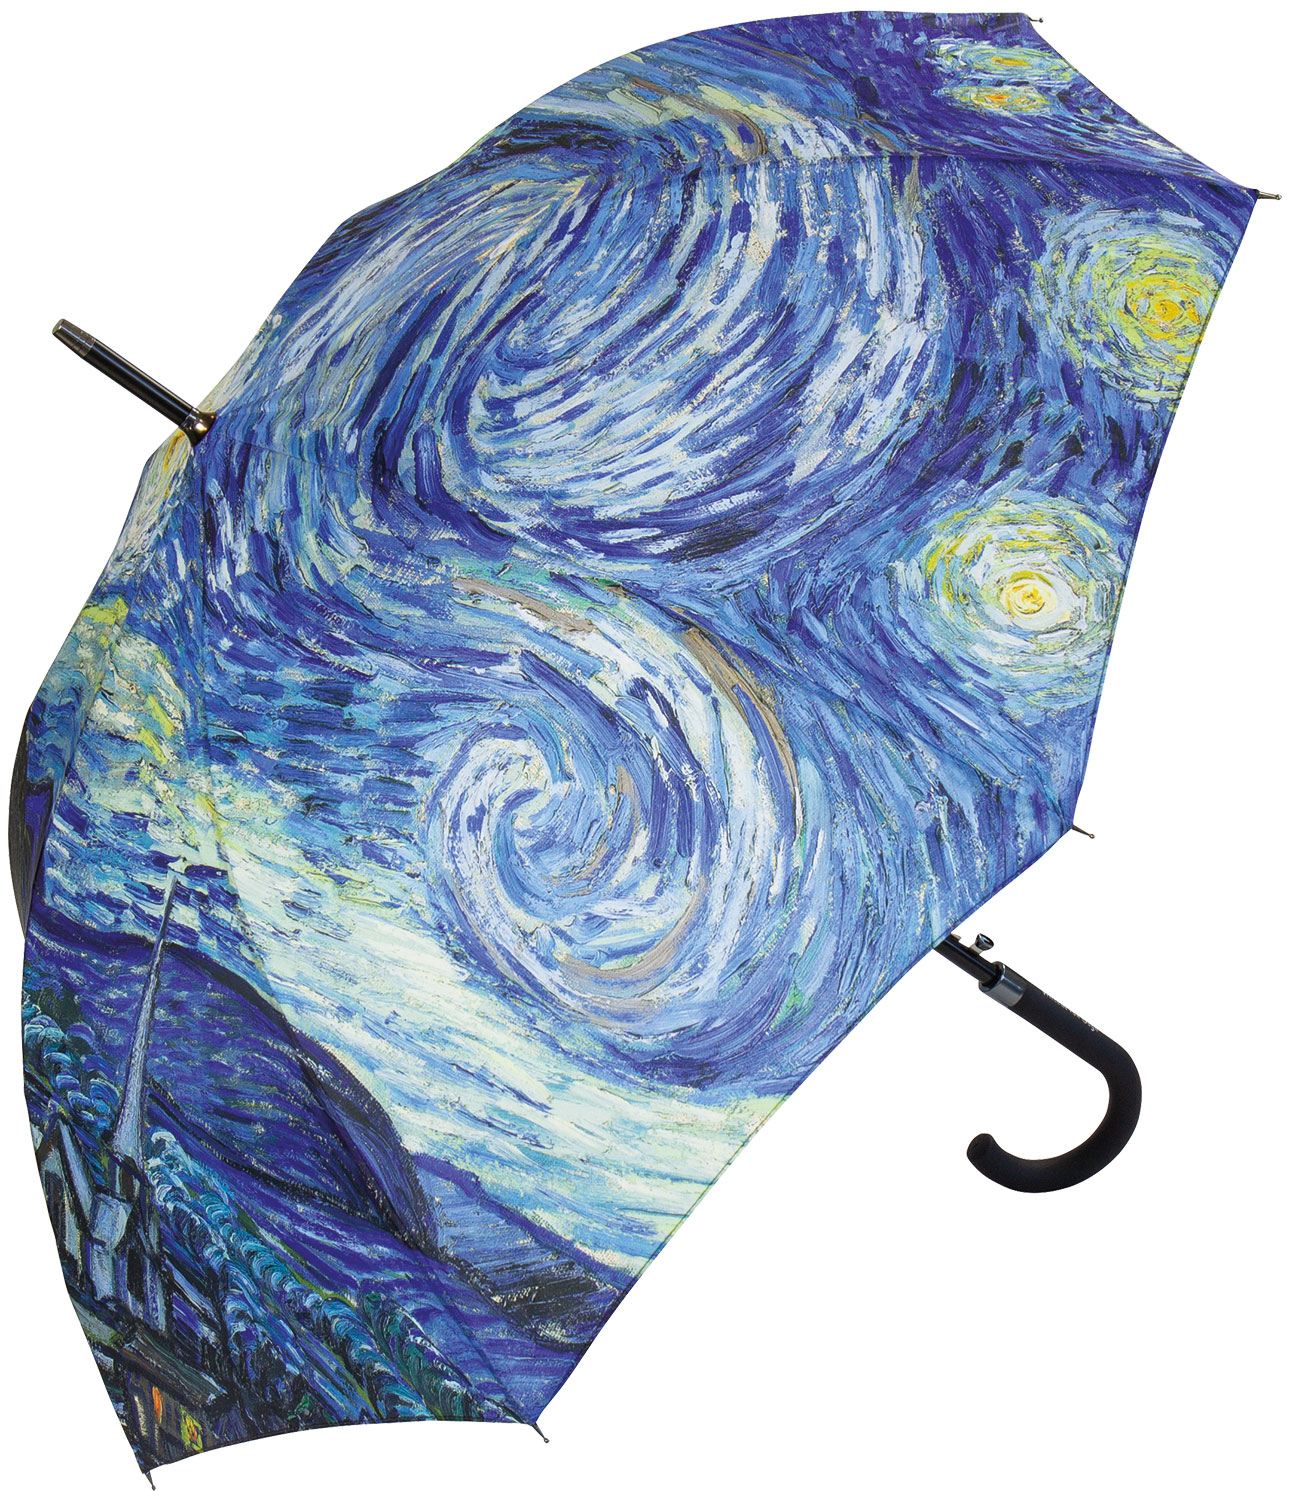 Stick umbrella "Starry Night" by Vincent van Gogh